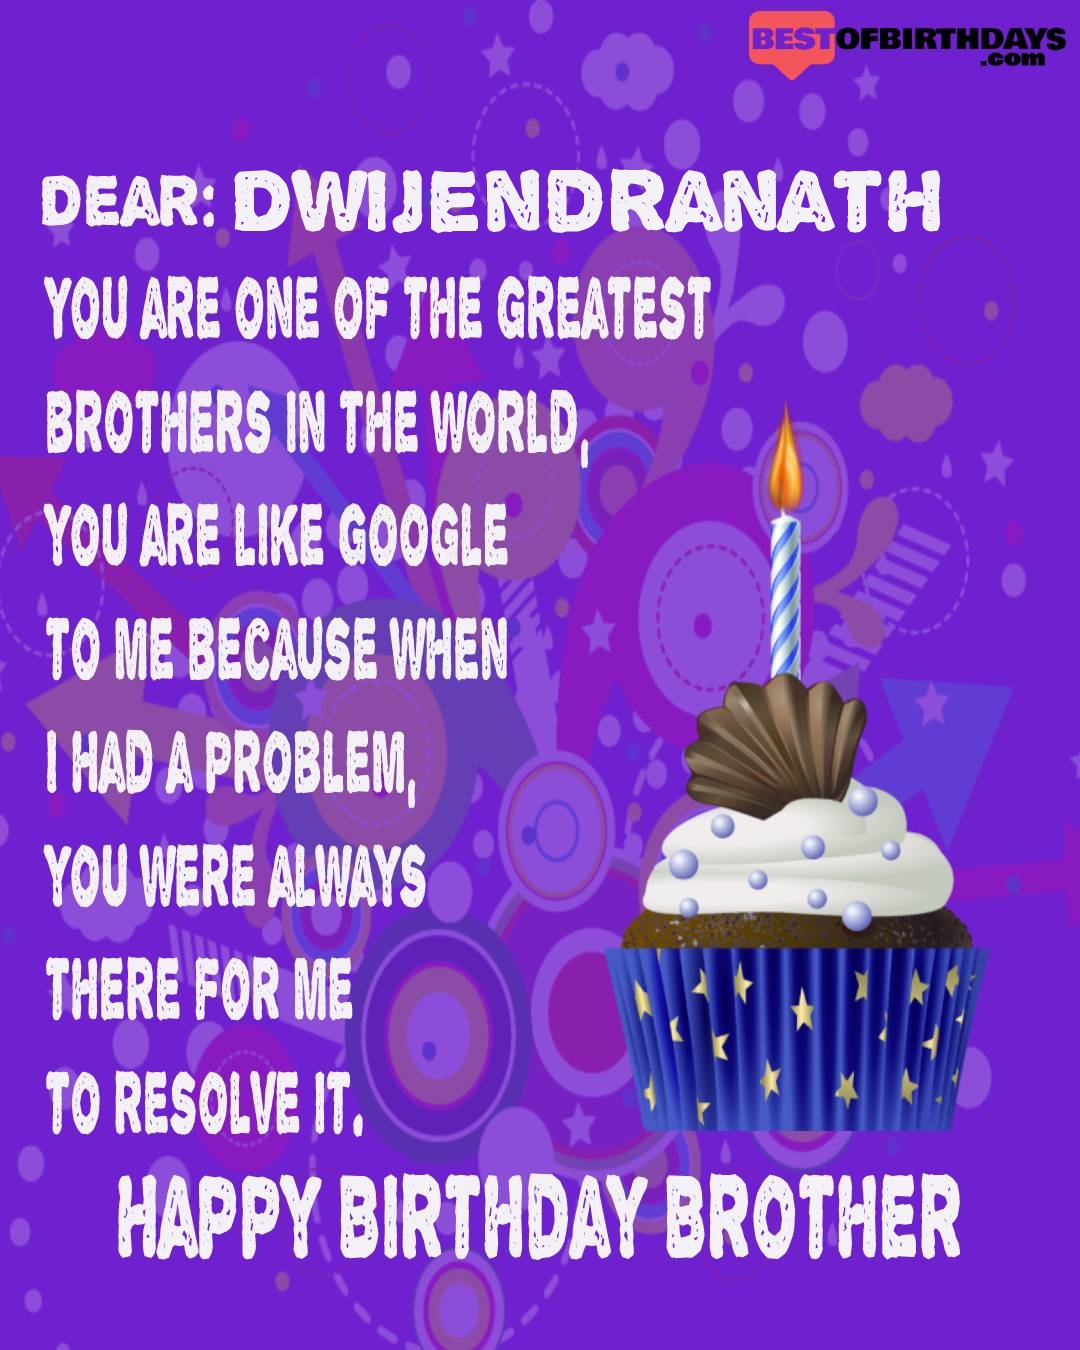 Happy birthday dwijendranath bhai brother bro